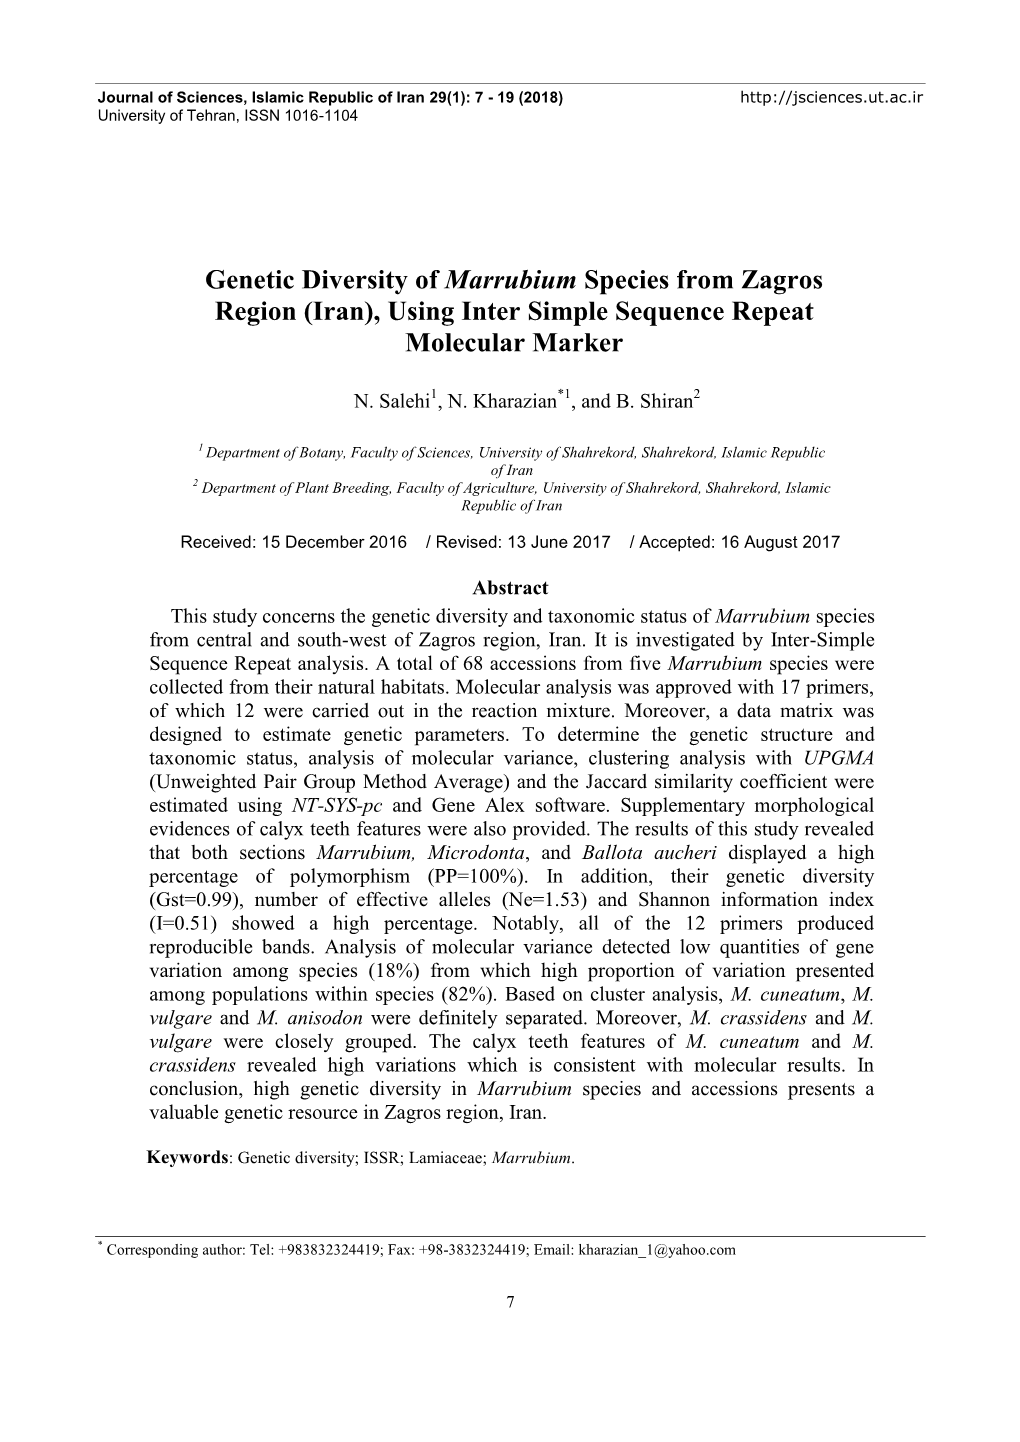 Genetic Diversity of Marrubium Species from Zagros Region (Iran), Using Inter Simple Sequence Repeat Molecular Marker